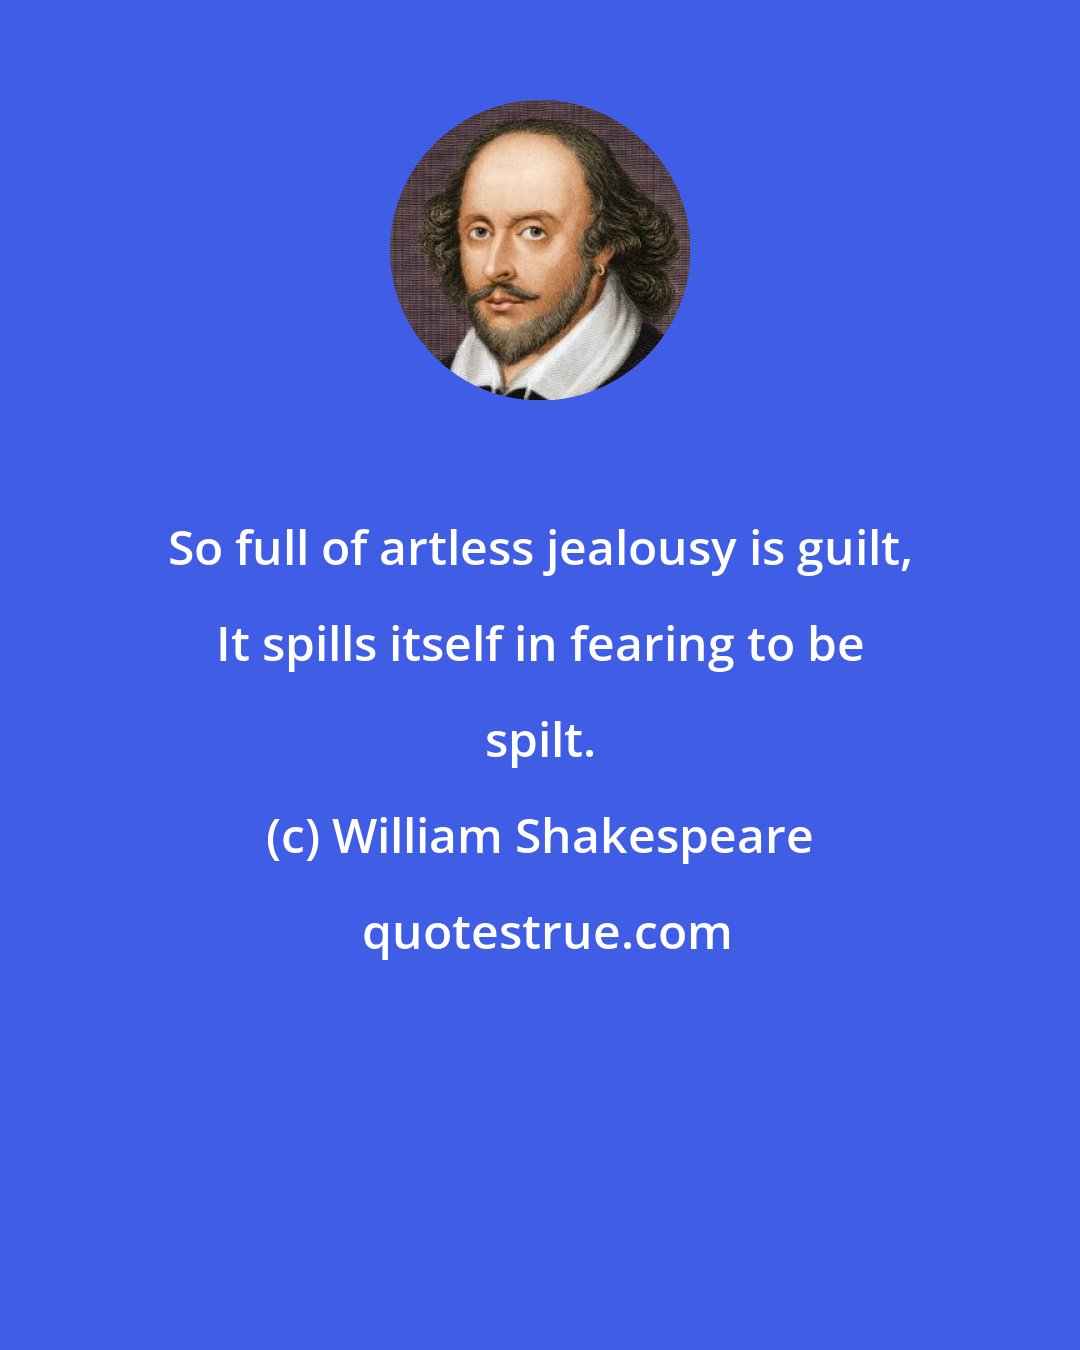 William Shakespeare: So full of artless jealousy is guilt, It spills itself in fearing to be spilt.